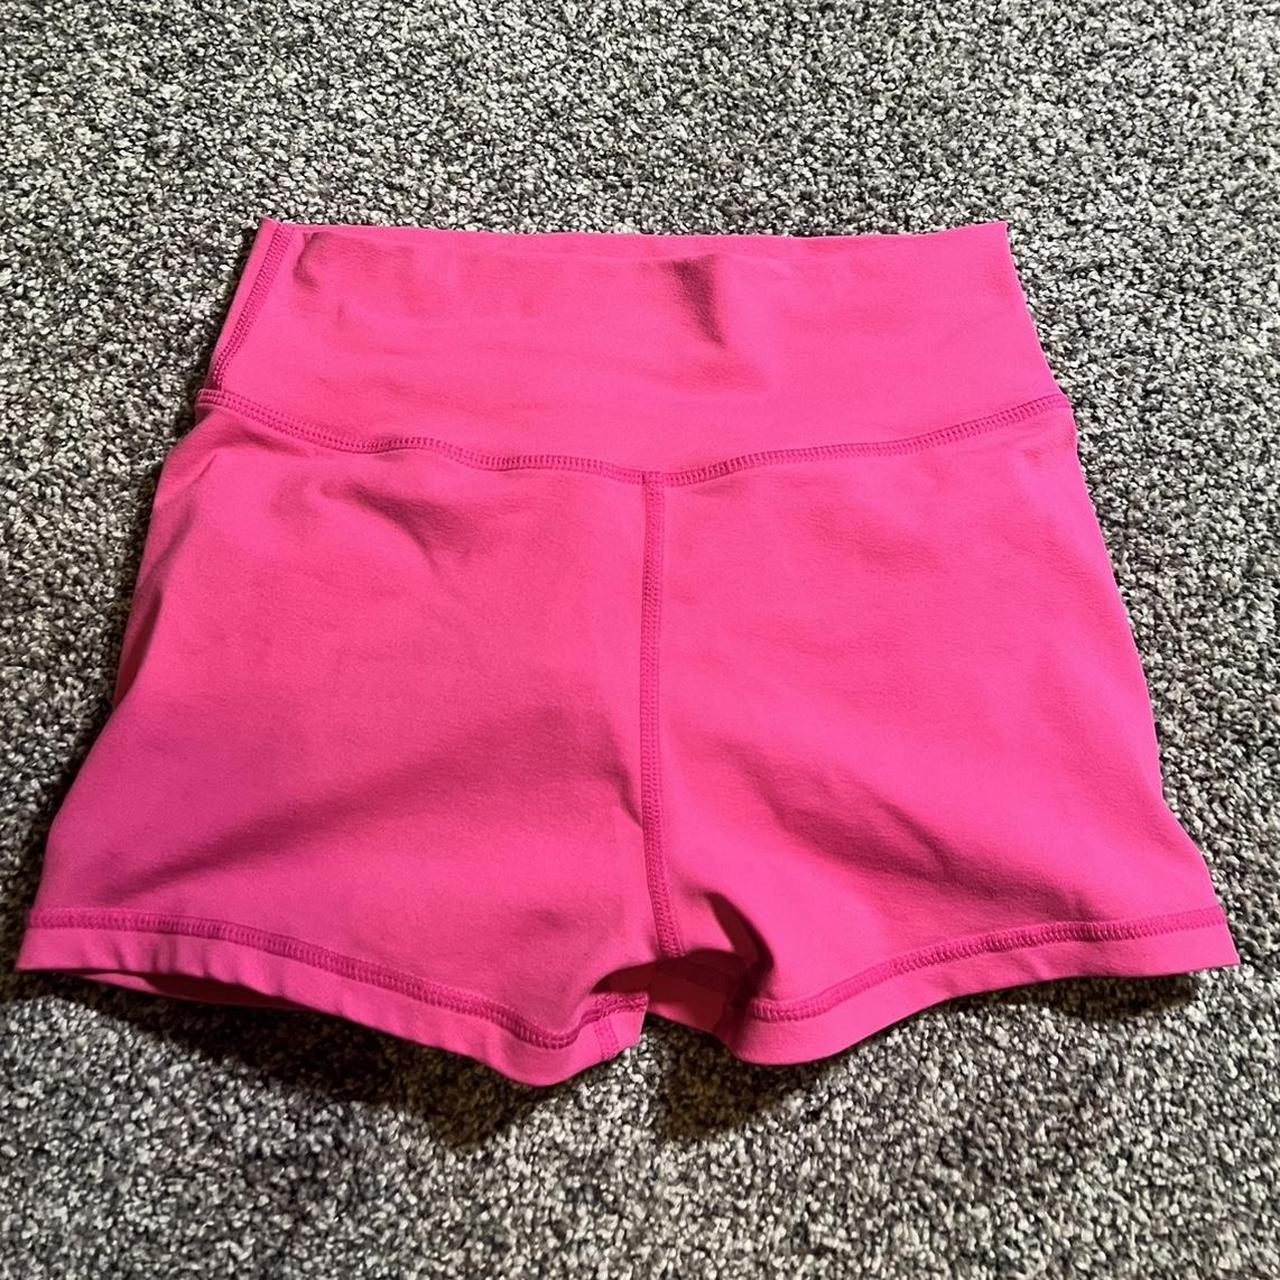 Muscle nation neon pink scrunch shorts alphalete... - Depop